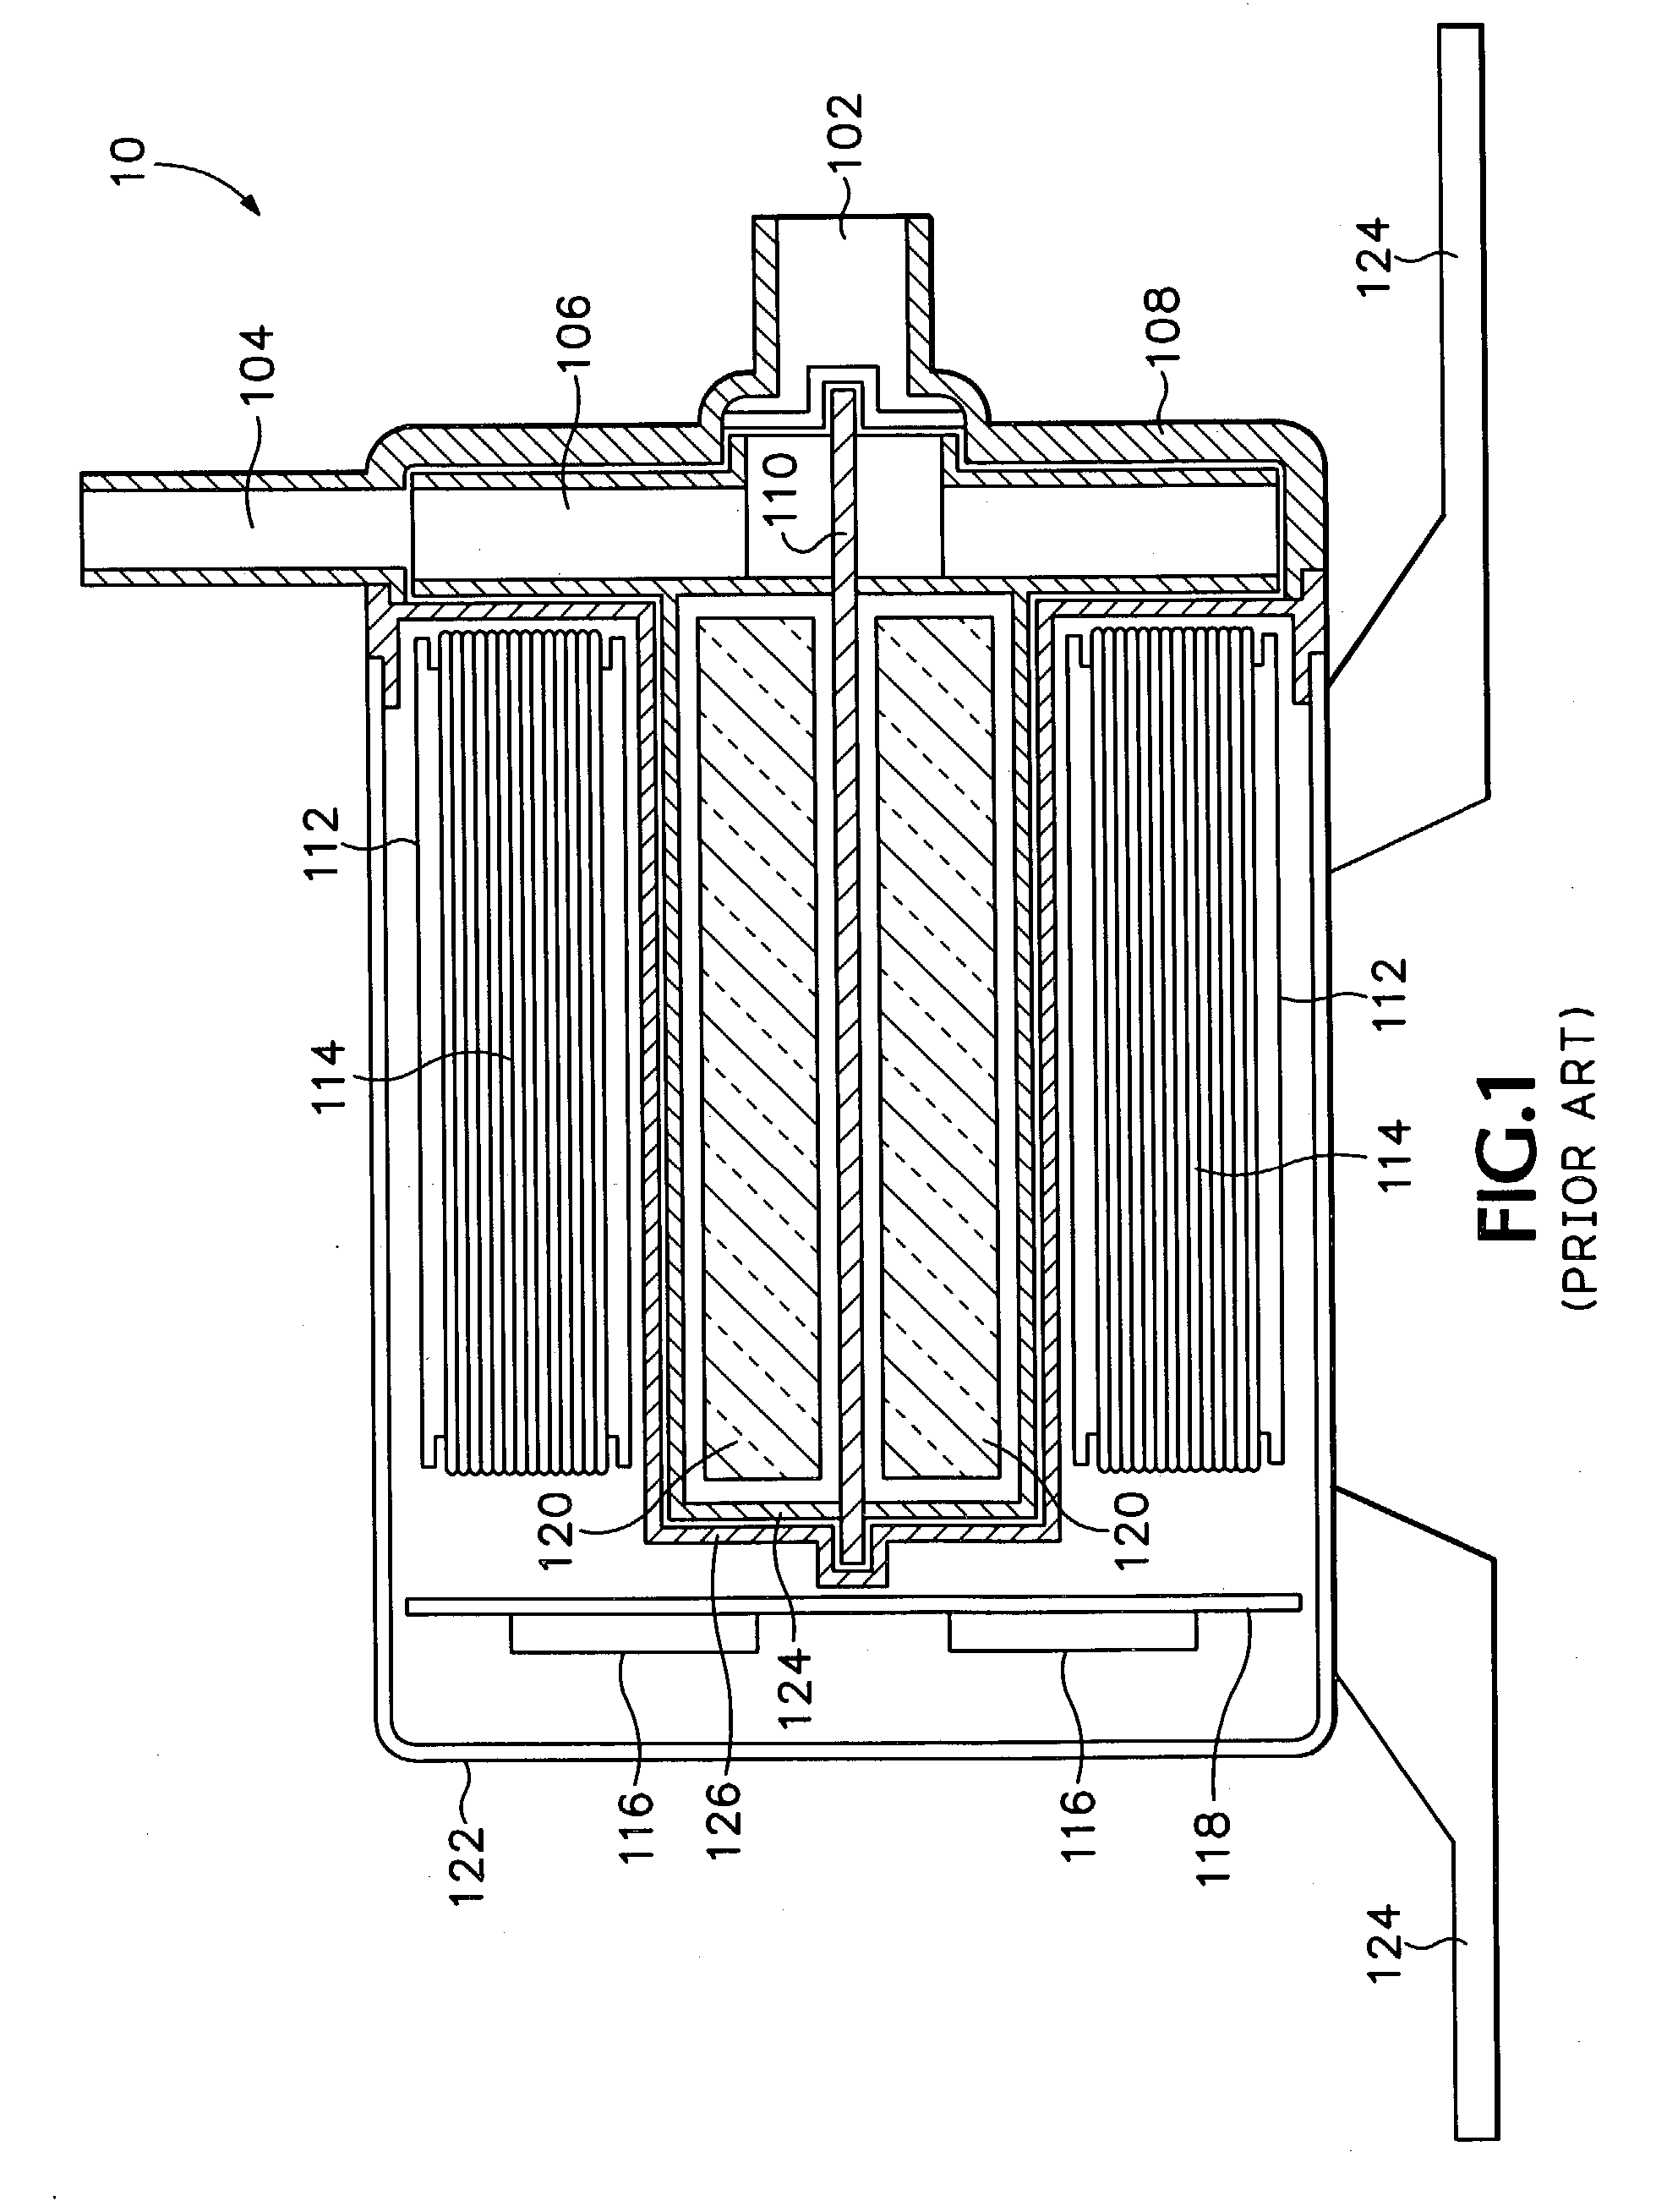 Centrifugal liquid pump with perimeter magnetic drive